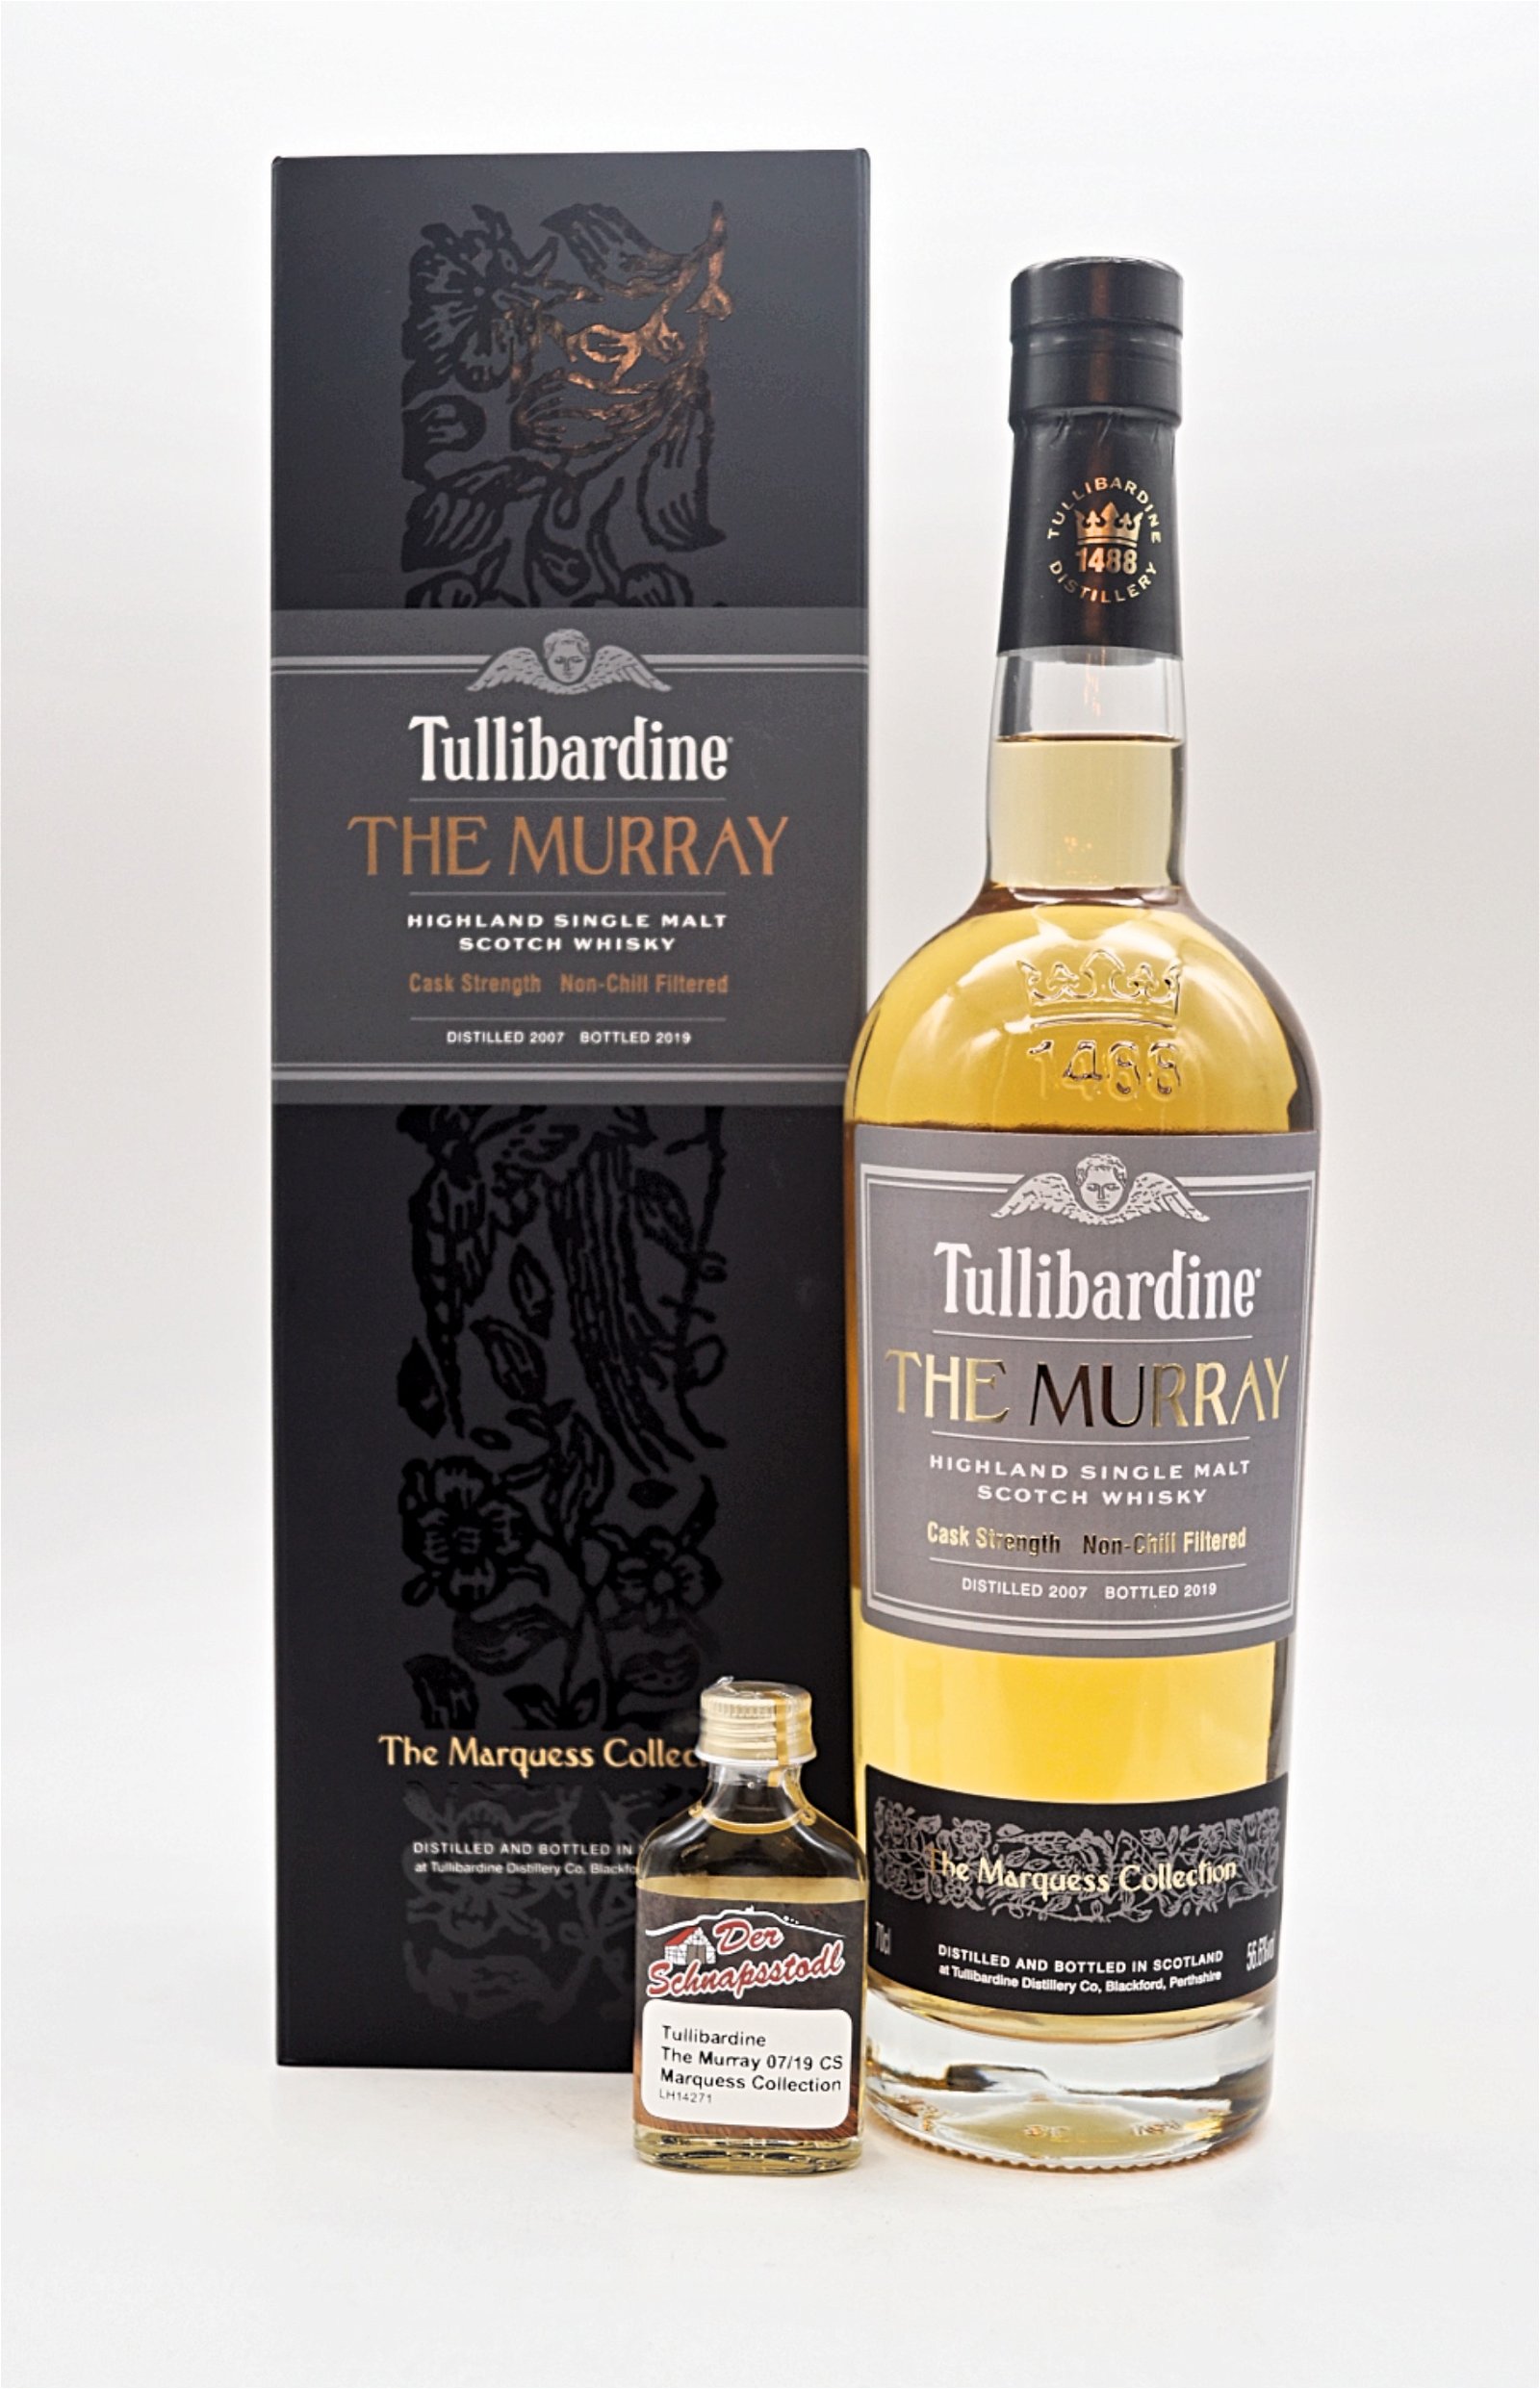 Tullibardine The Murray 2007/2019 The Marquess Collection Cask Strength Highland Single Malt Scotch Whisky Sample